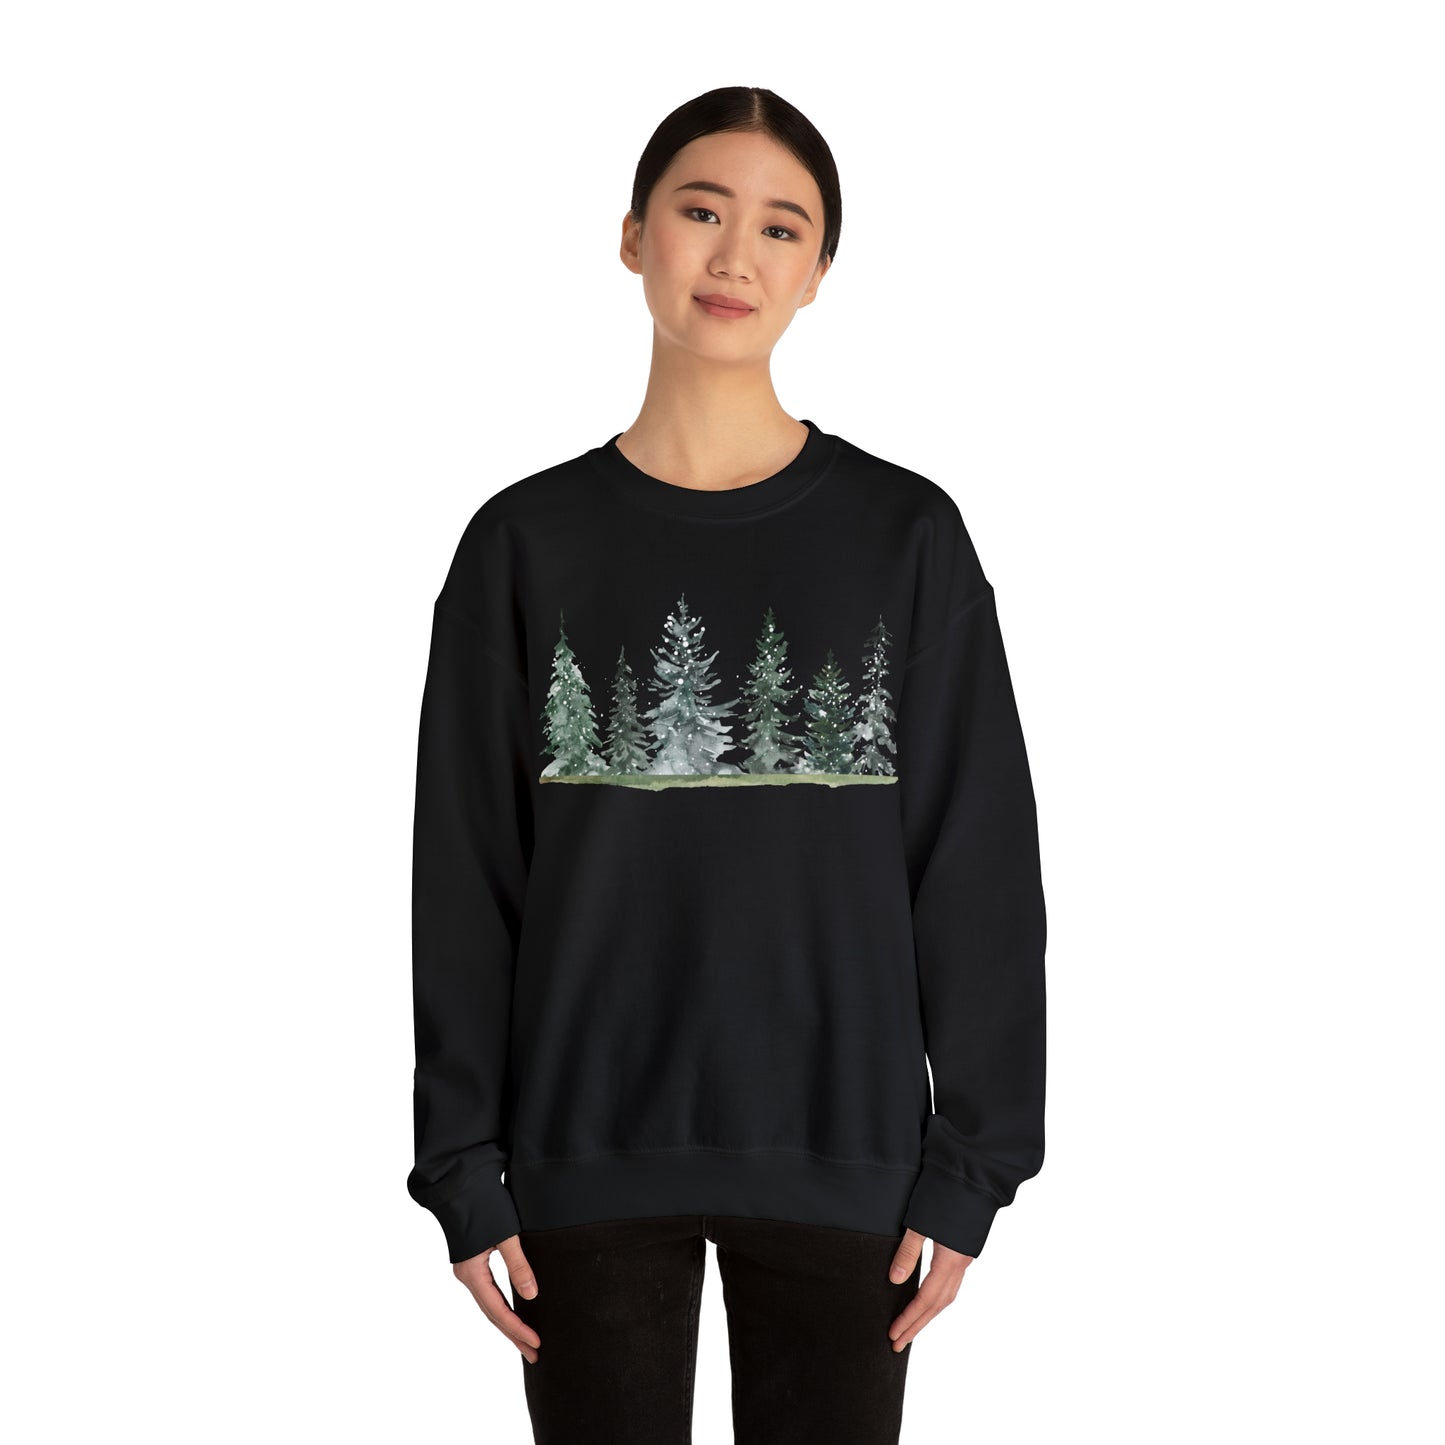 Pine Tree  Sweatshirt , Christmas Tree Sweatshirt, Snow Pine Tree Sweatshirt, Sweatshirt for Women,